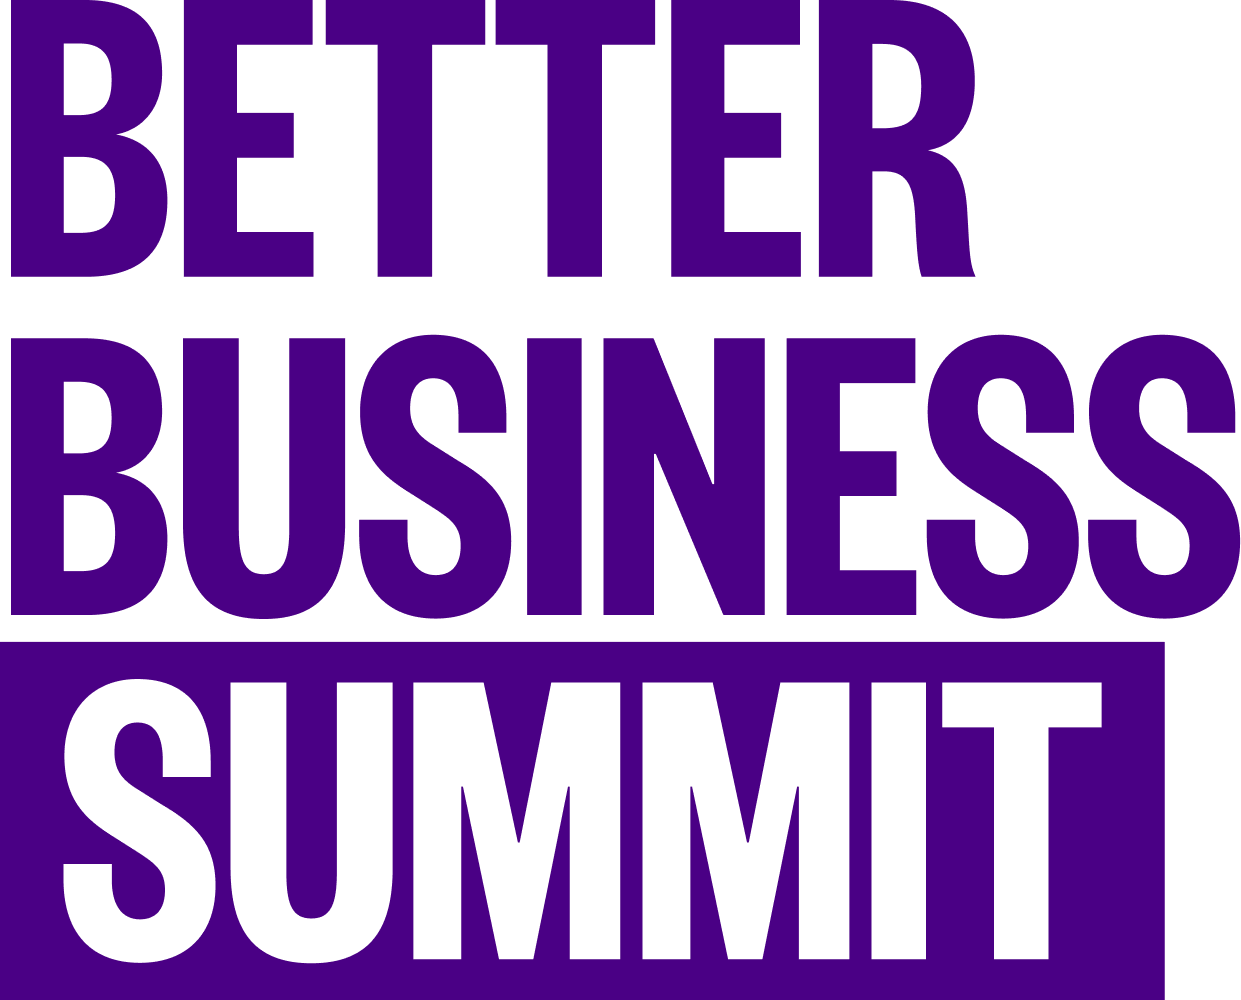 Better Business Summit